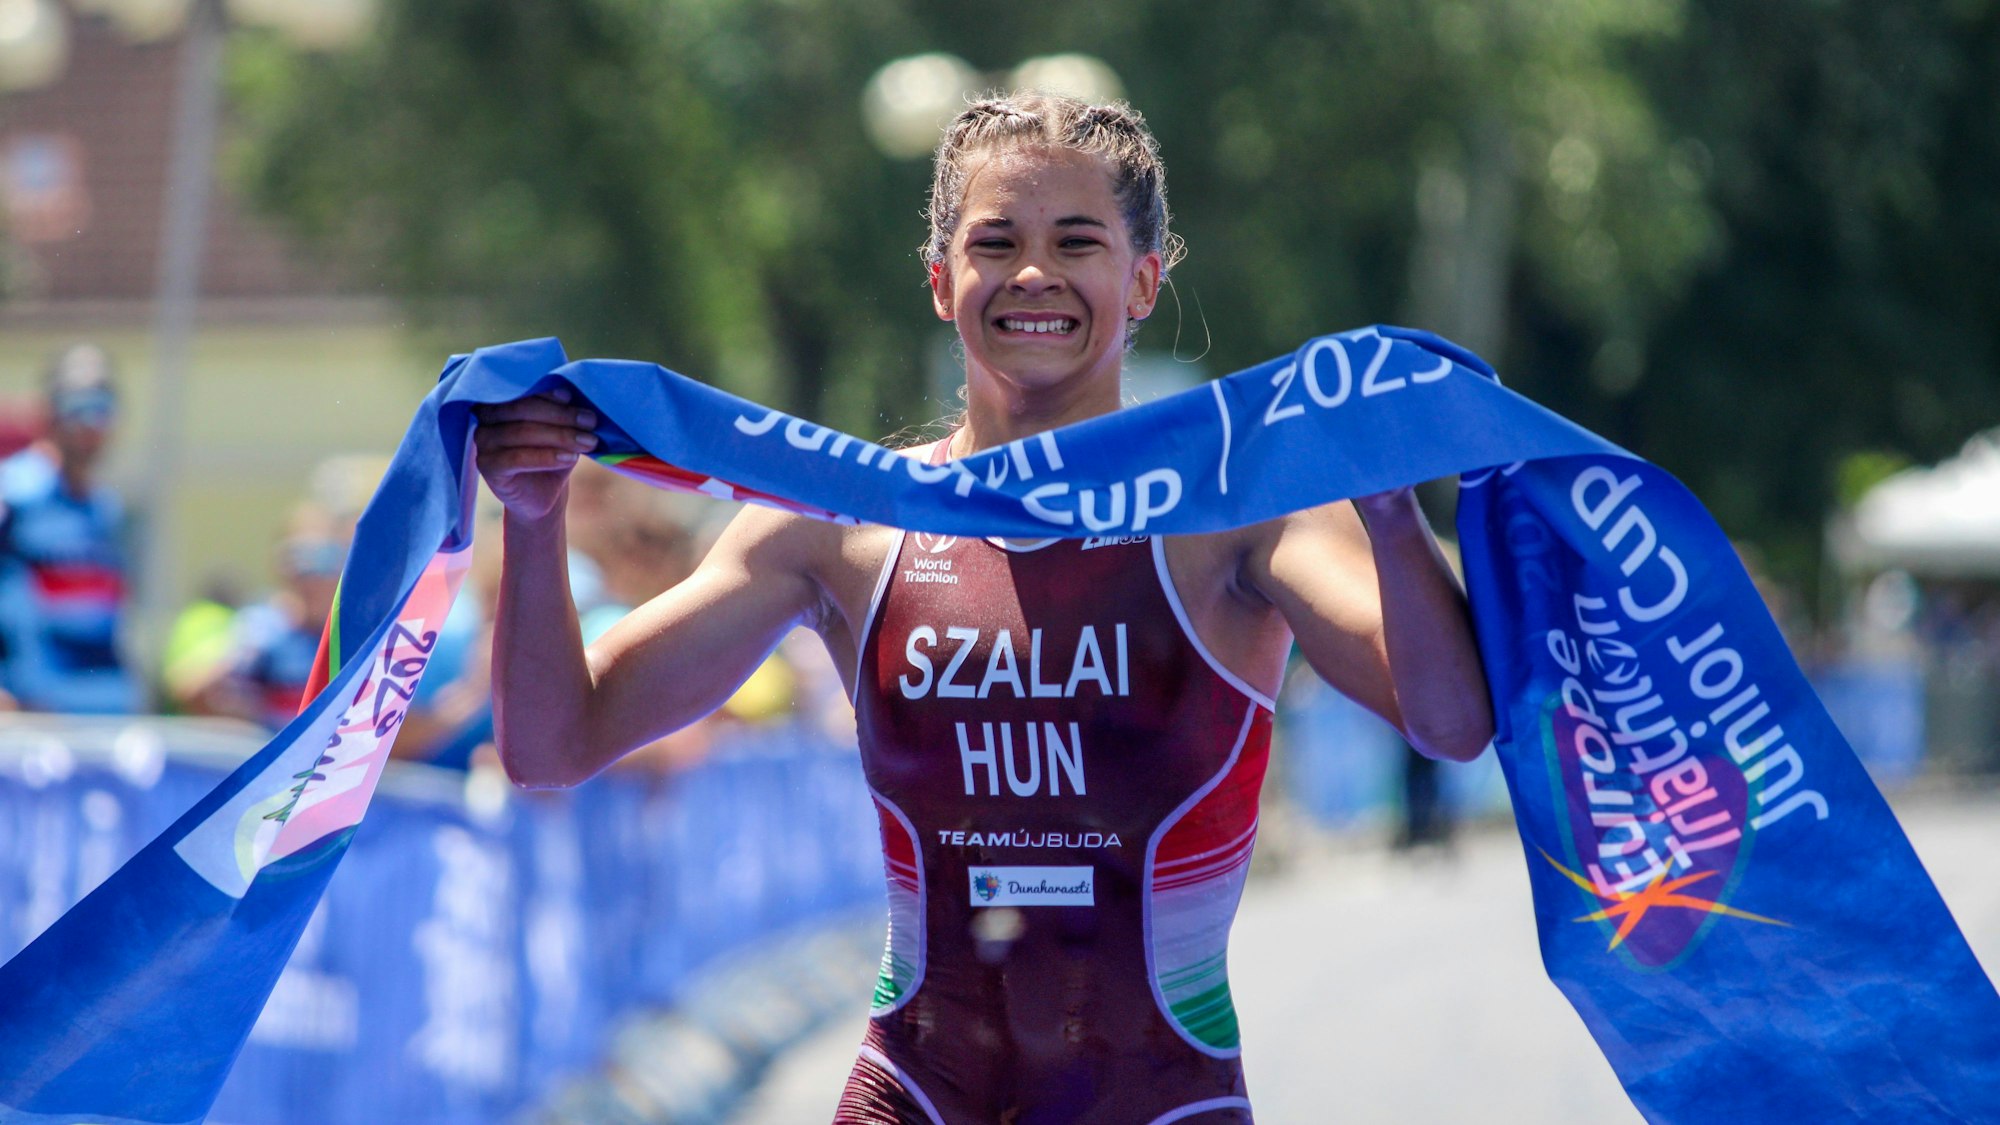 Fanni Szalai, 15-jähriges Top-Talent aus Ungarn, verstärkt das Kölner Triathlon Team.